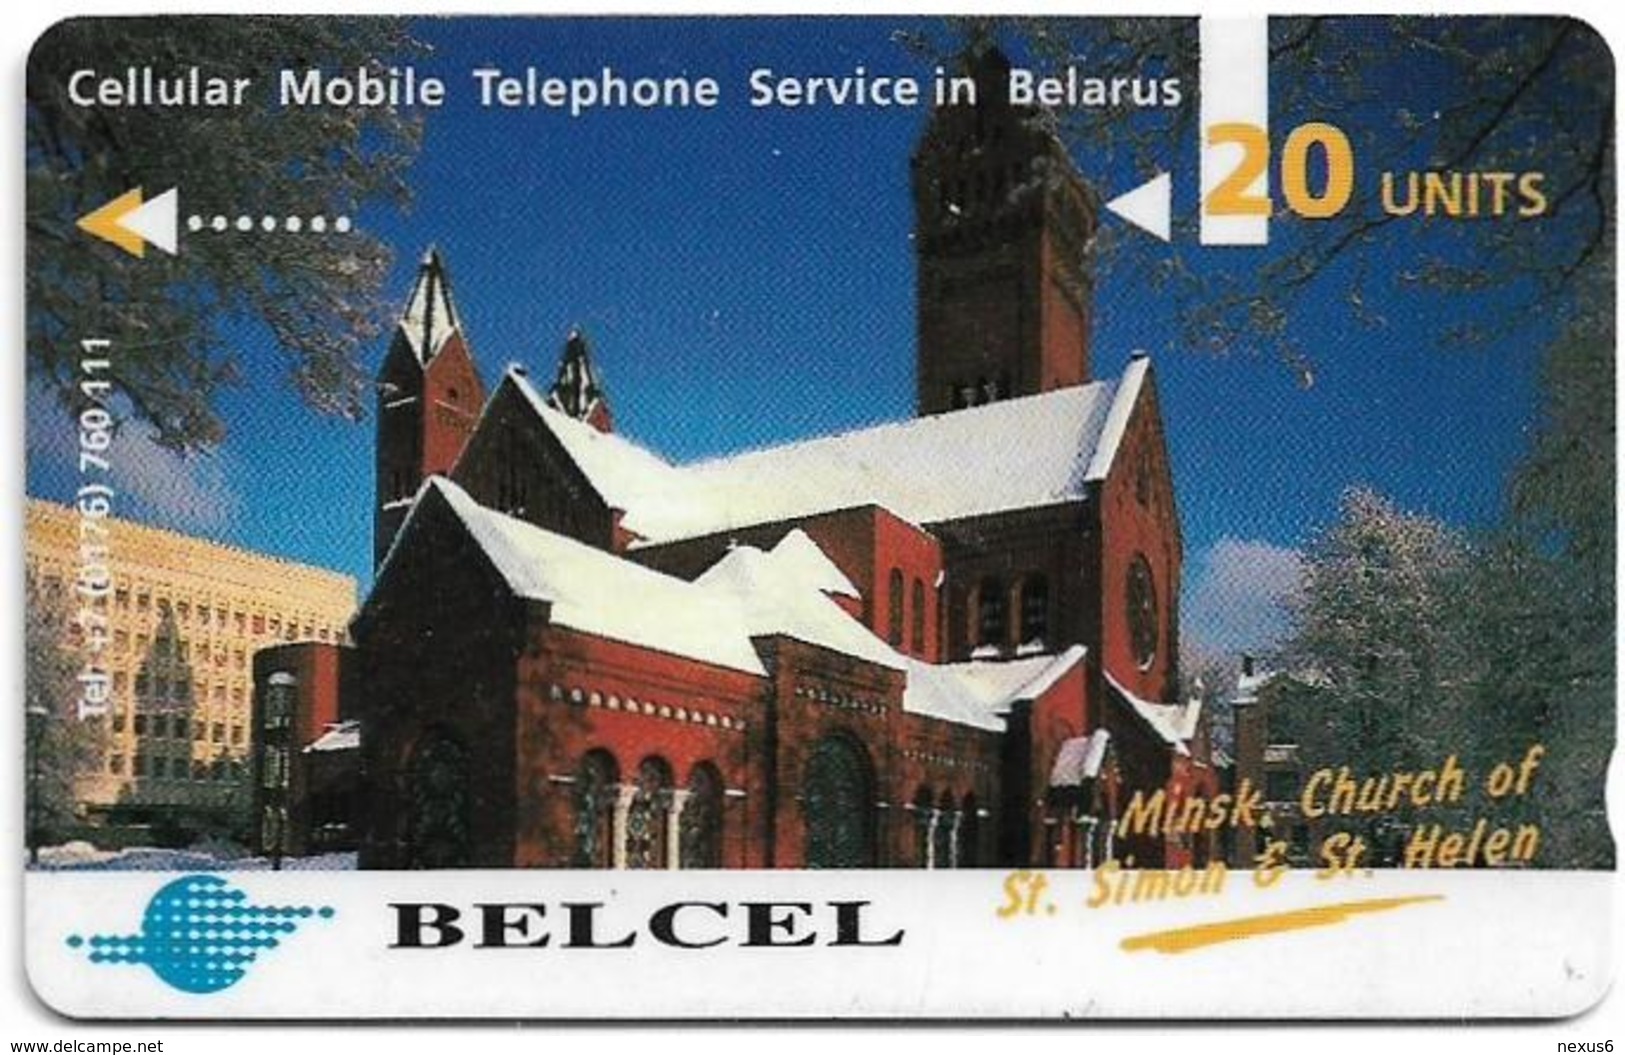 Belarus - St. Simon & St. Helen, Minsk (English Text), 1CWMB, 11.000ex, 1995, Used - Belarus